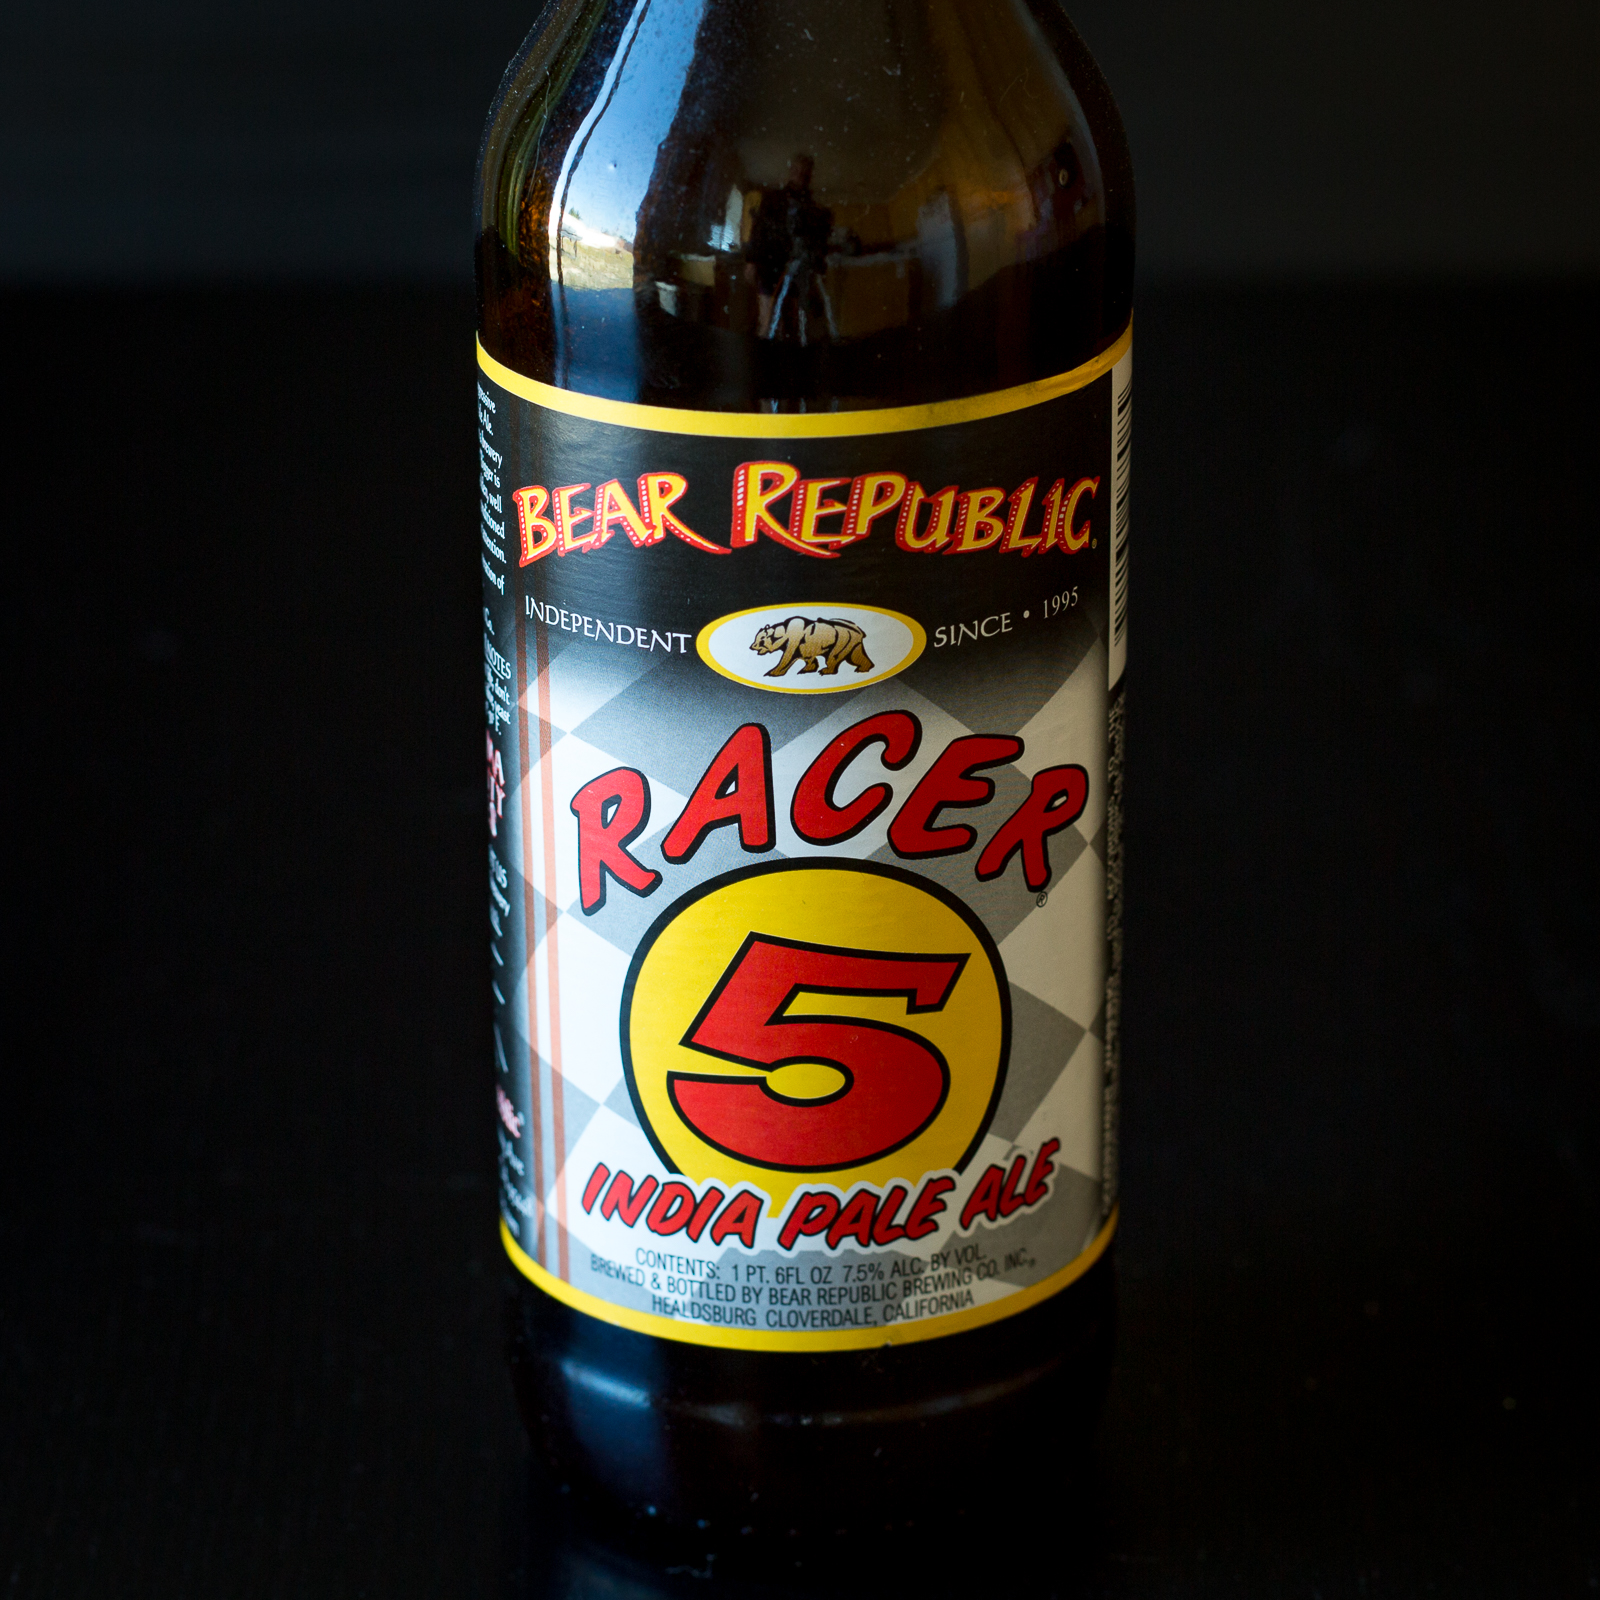 Bear Republic Brewing Co. - Racer 5 IPA